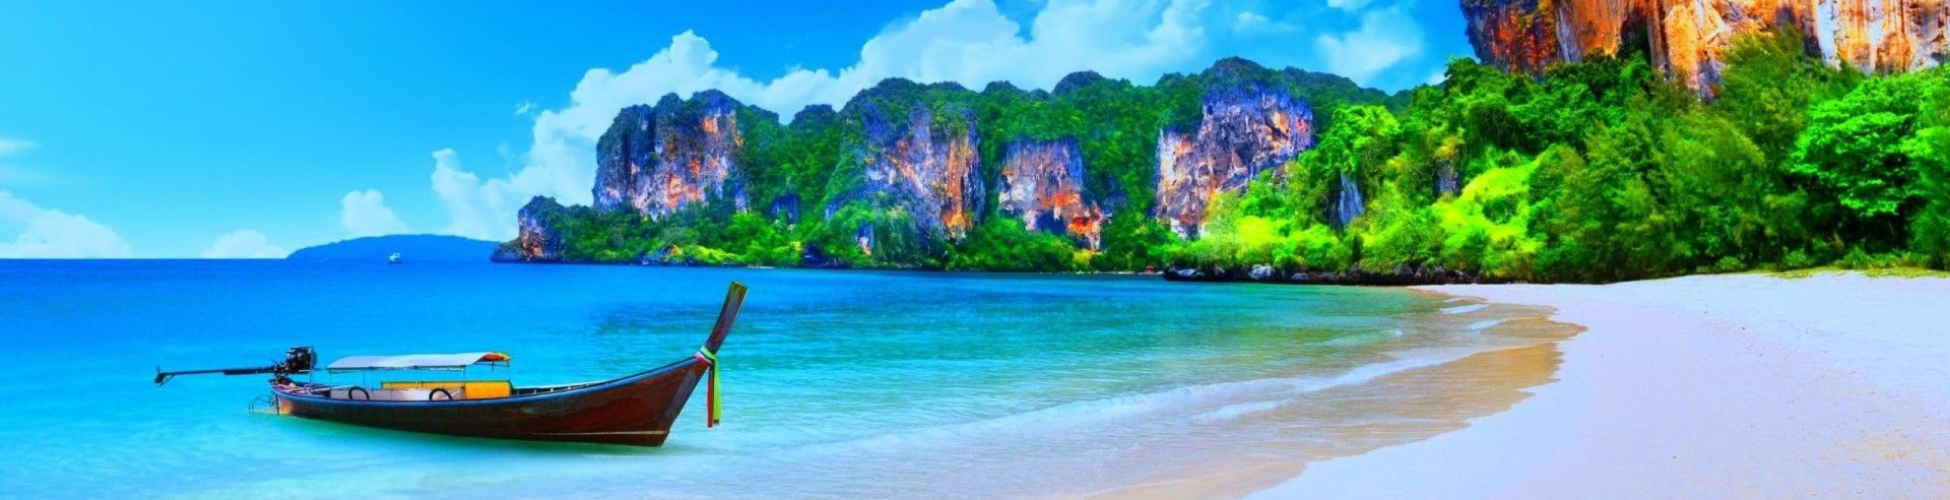 Enjoy An Island With Andaman Honeymoon Tour Package